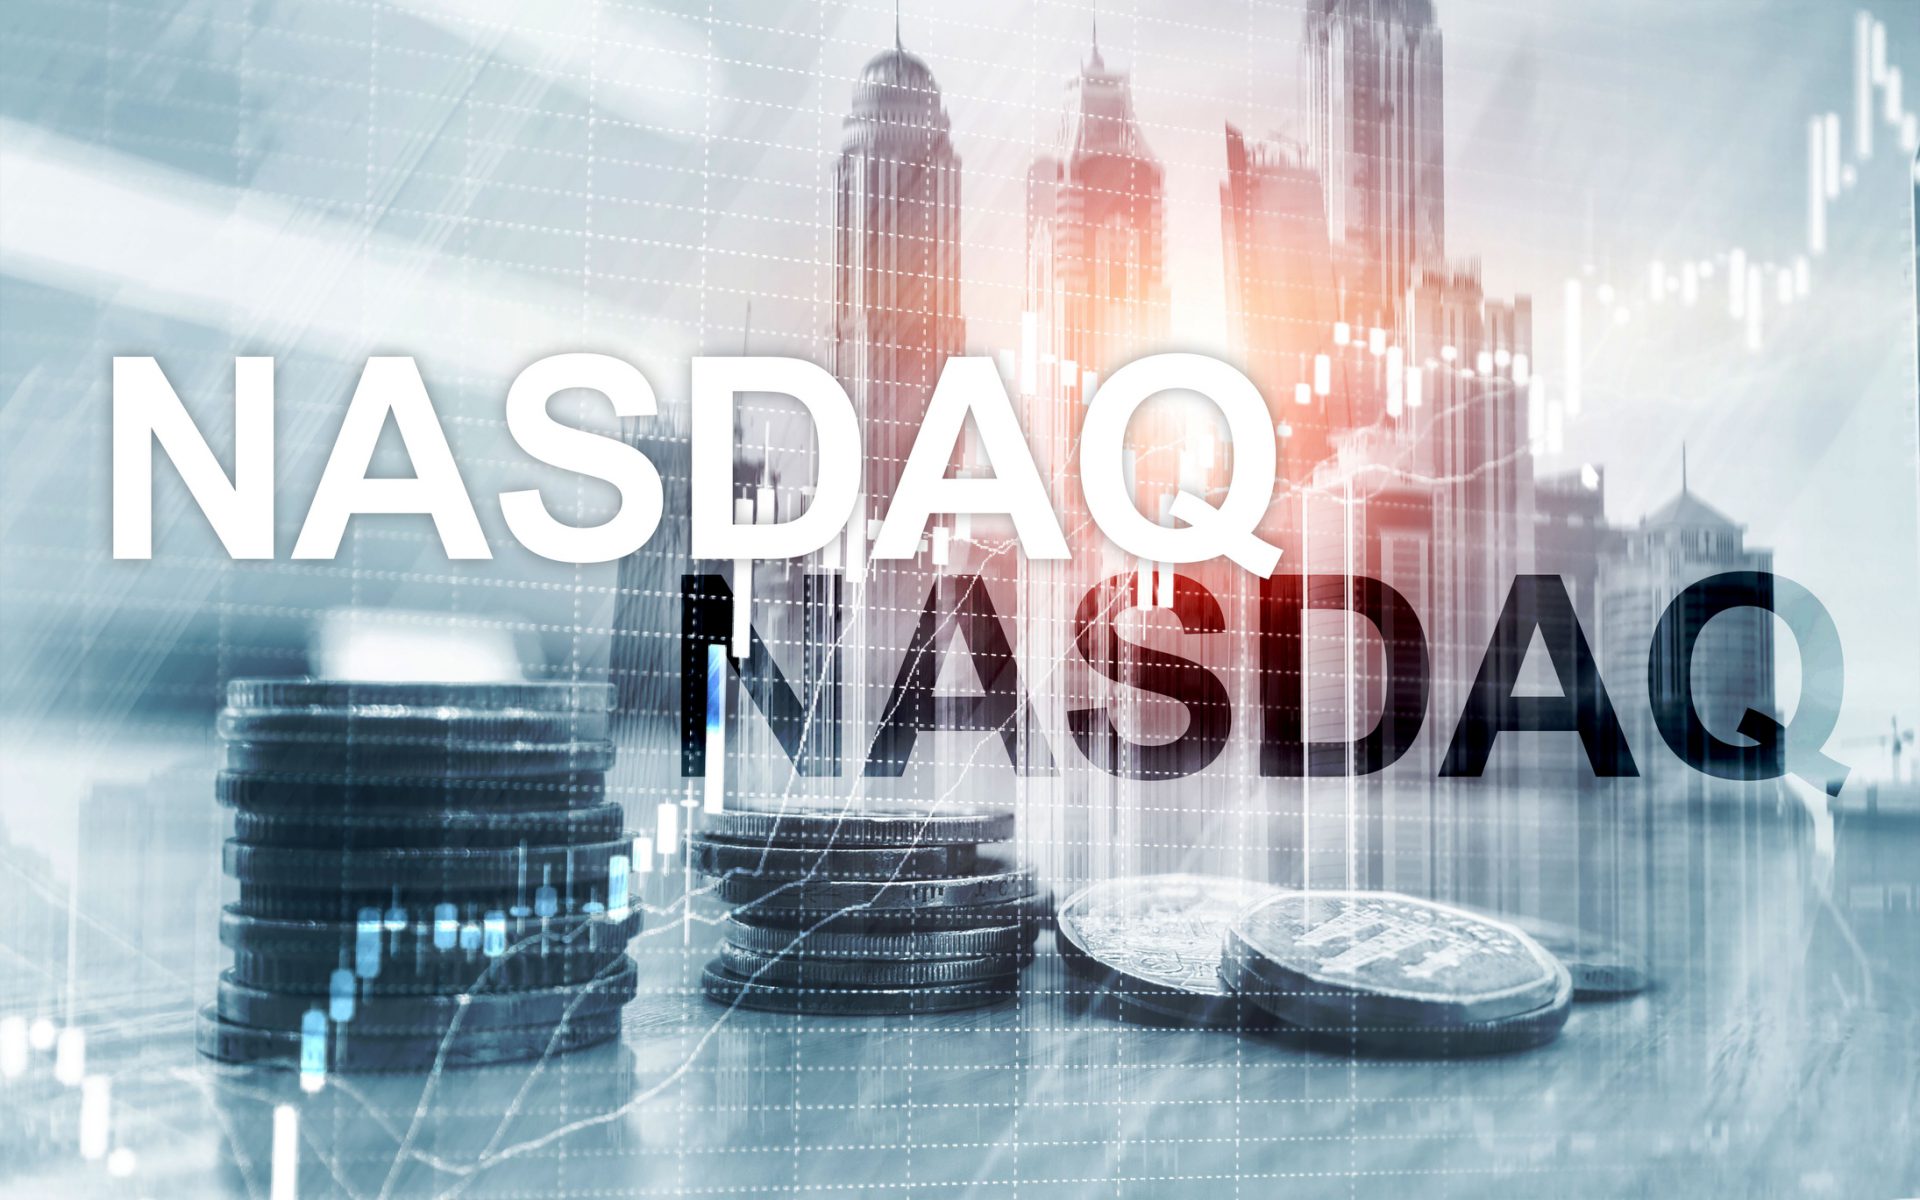 National Association of Securities Dealers Automated Quotation. NASDAQ